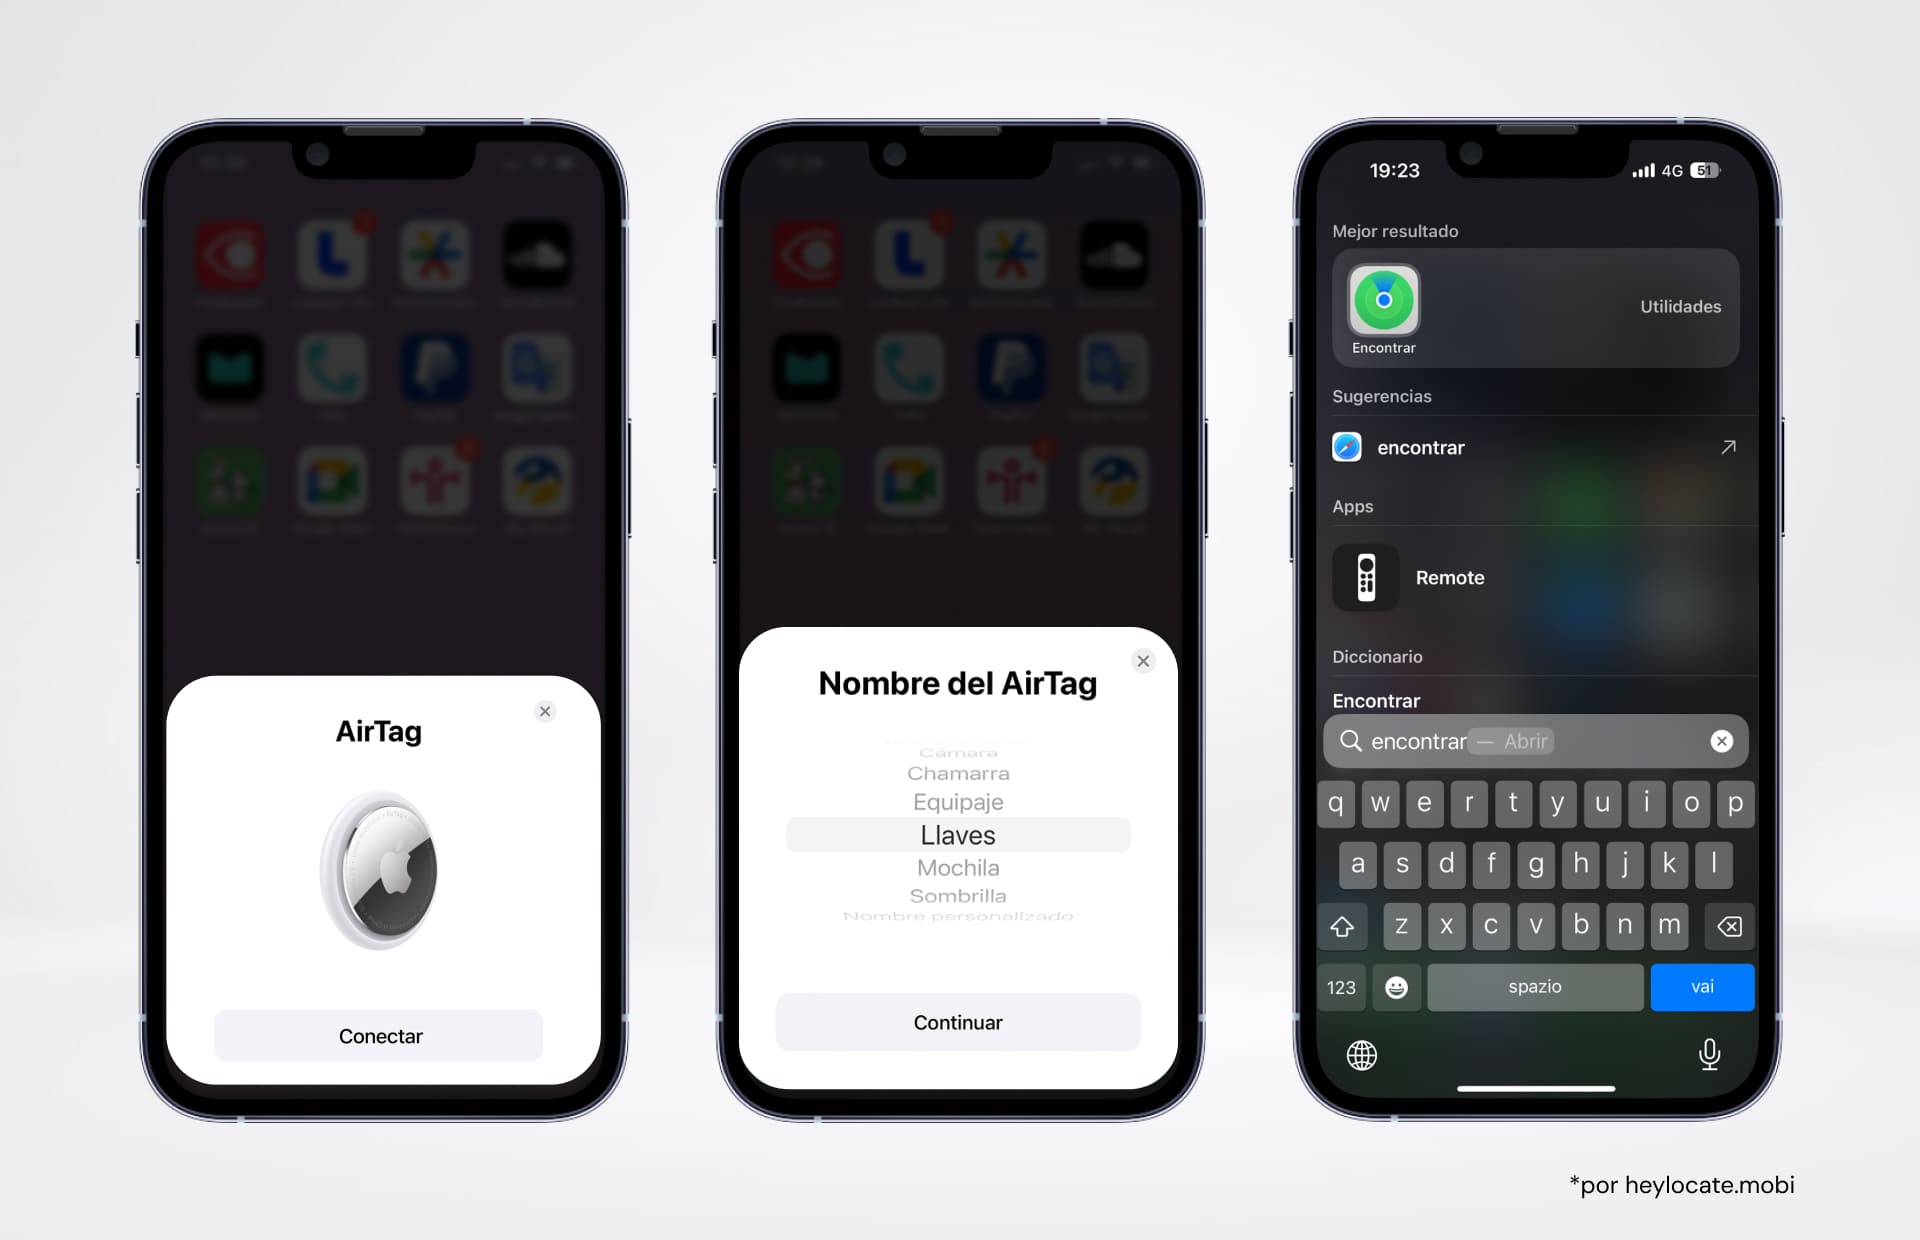 Tres iPhones mostrando diferentes etapas del uso de Apple AirTag. El primero muestra la conexión al AirTag, el segundo muestra la interfaz de nomenclatura del AirTag y el tercero muestra la entrada a la app Encontrar